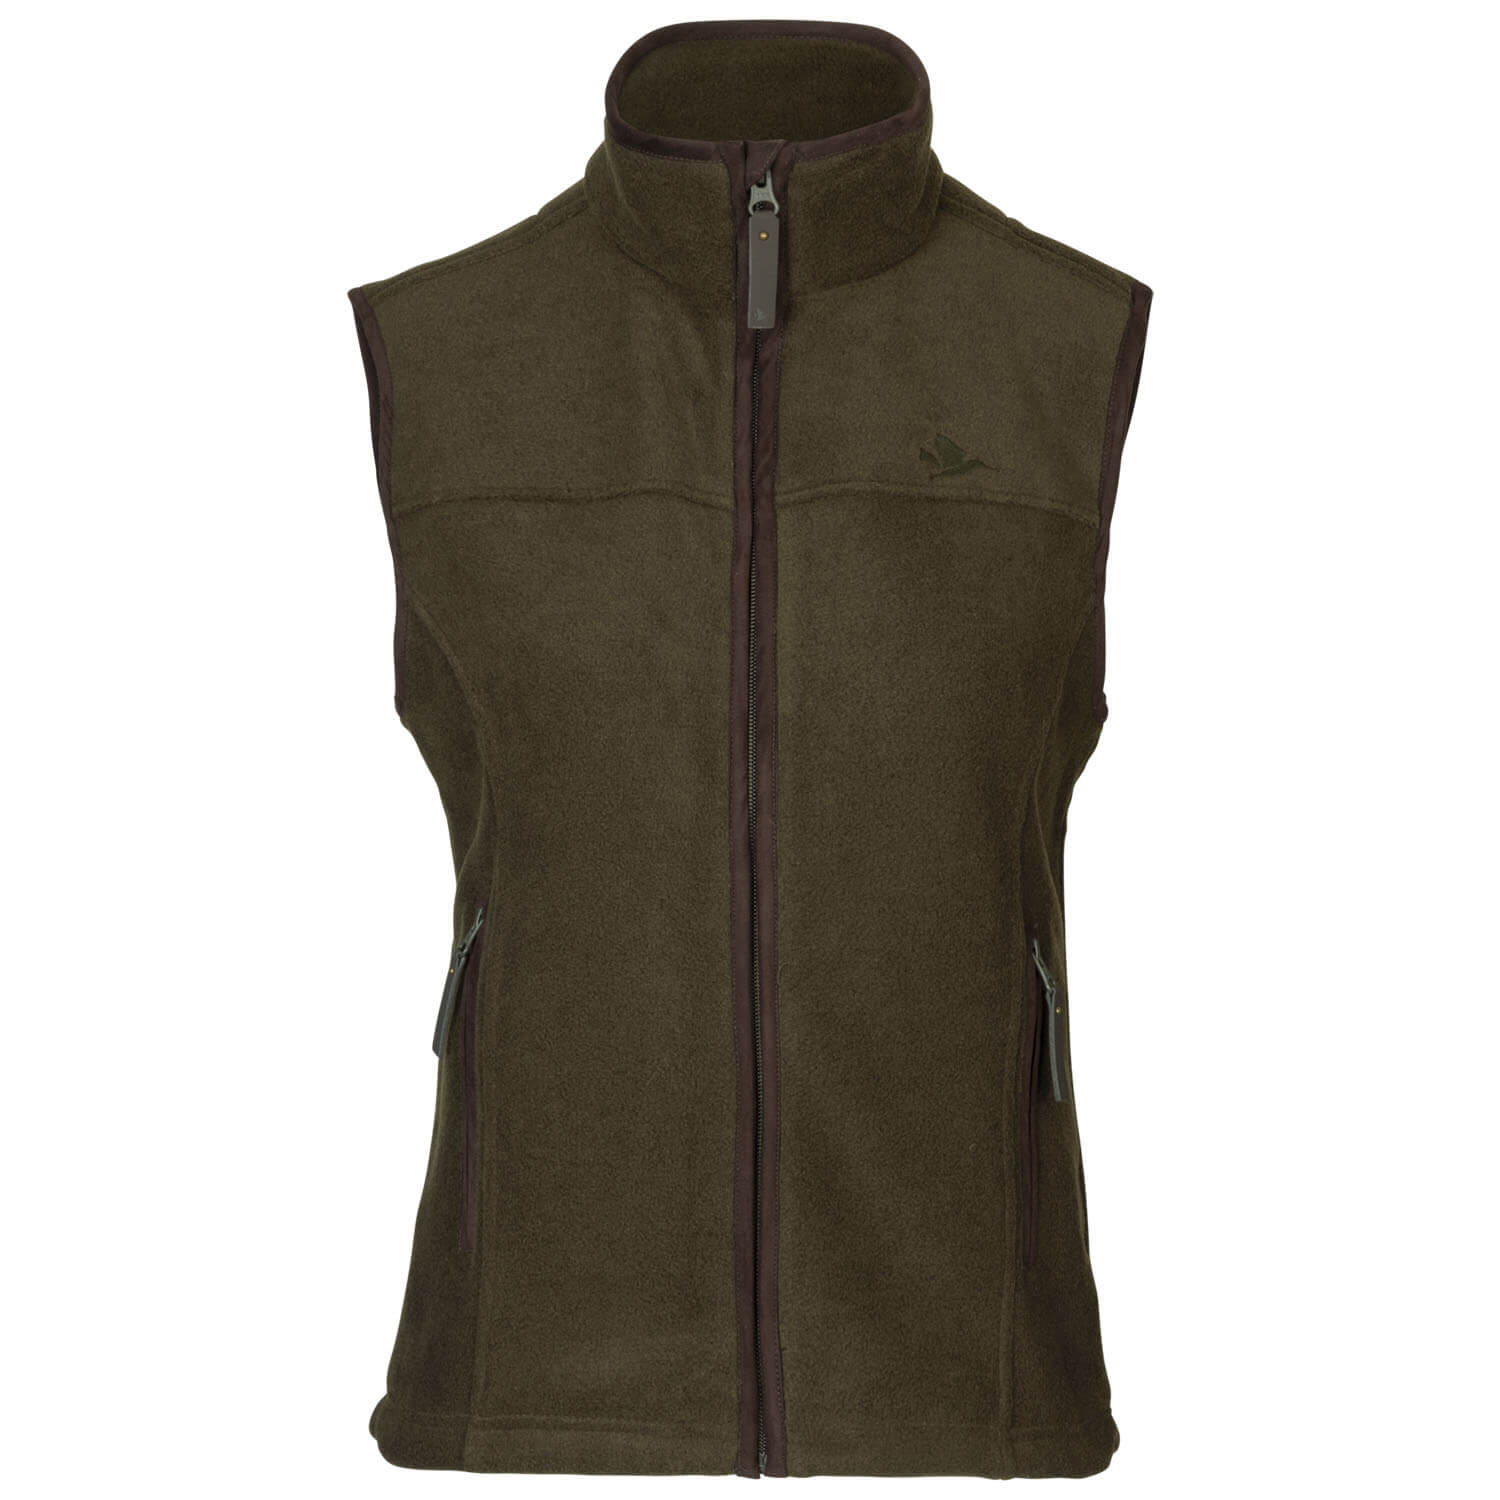 Seeland fleece vest Woodcock Ivy (pine green melange) - Women's Hunting Clothing 